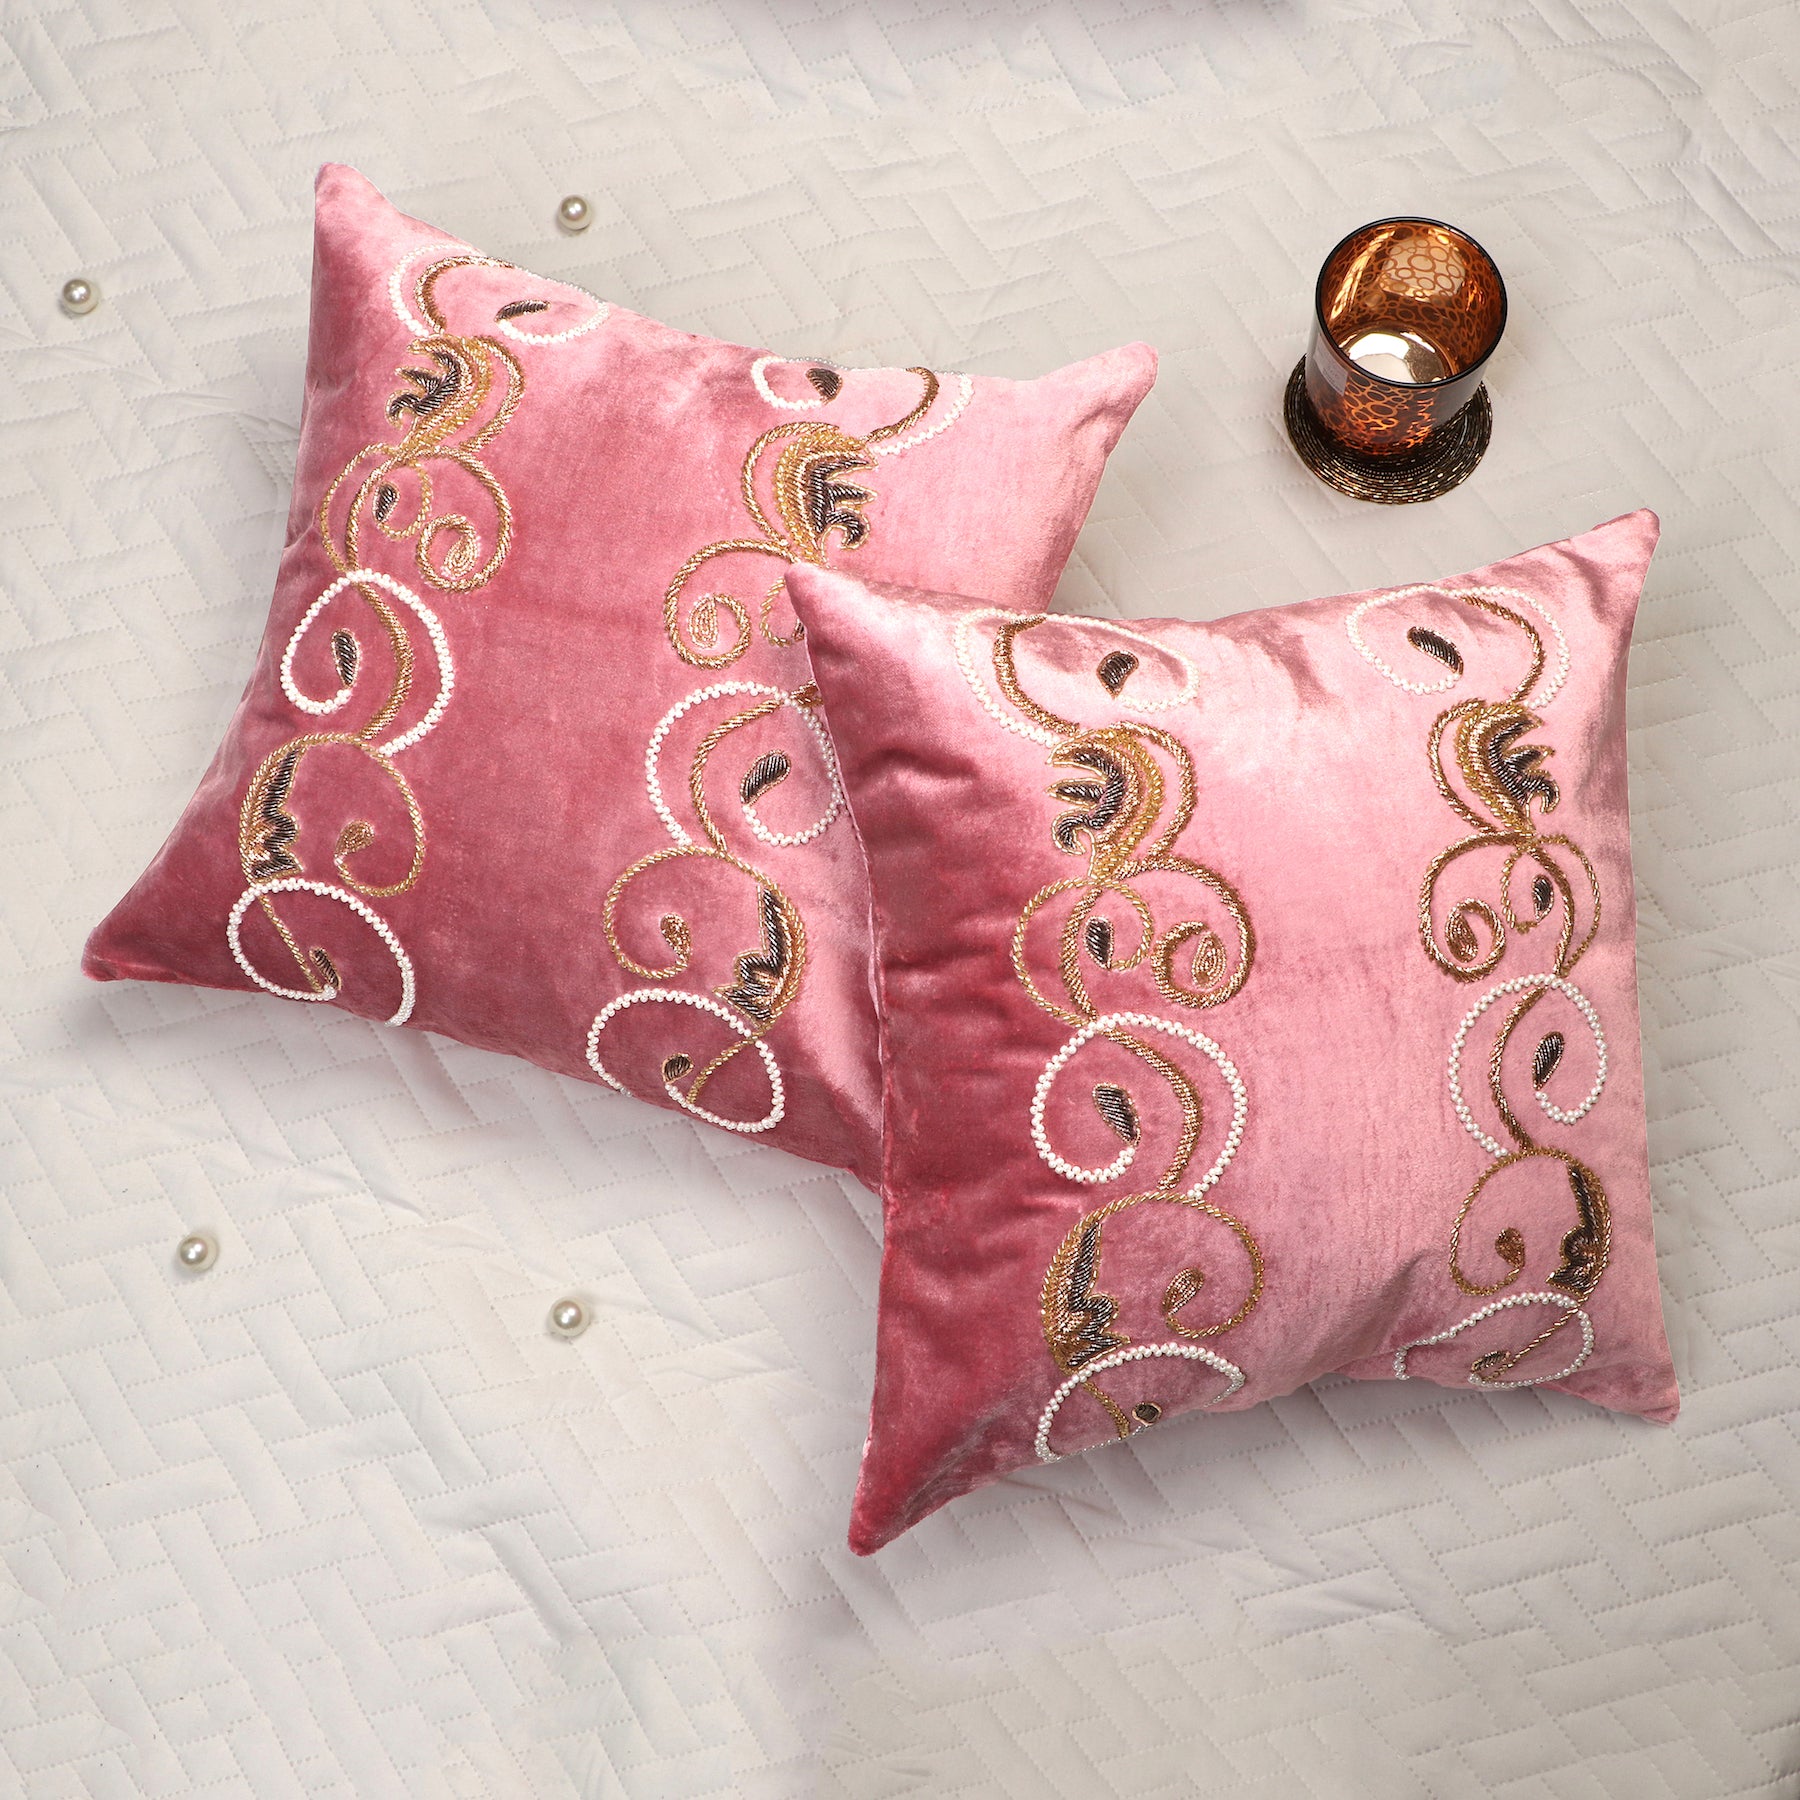 Autumn Swirl Pillow Cover -Rose pink Velvet Decorative Throw Pillow Cover Beaded in swirl leaf pattern